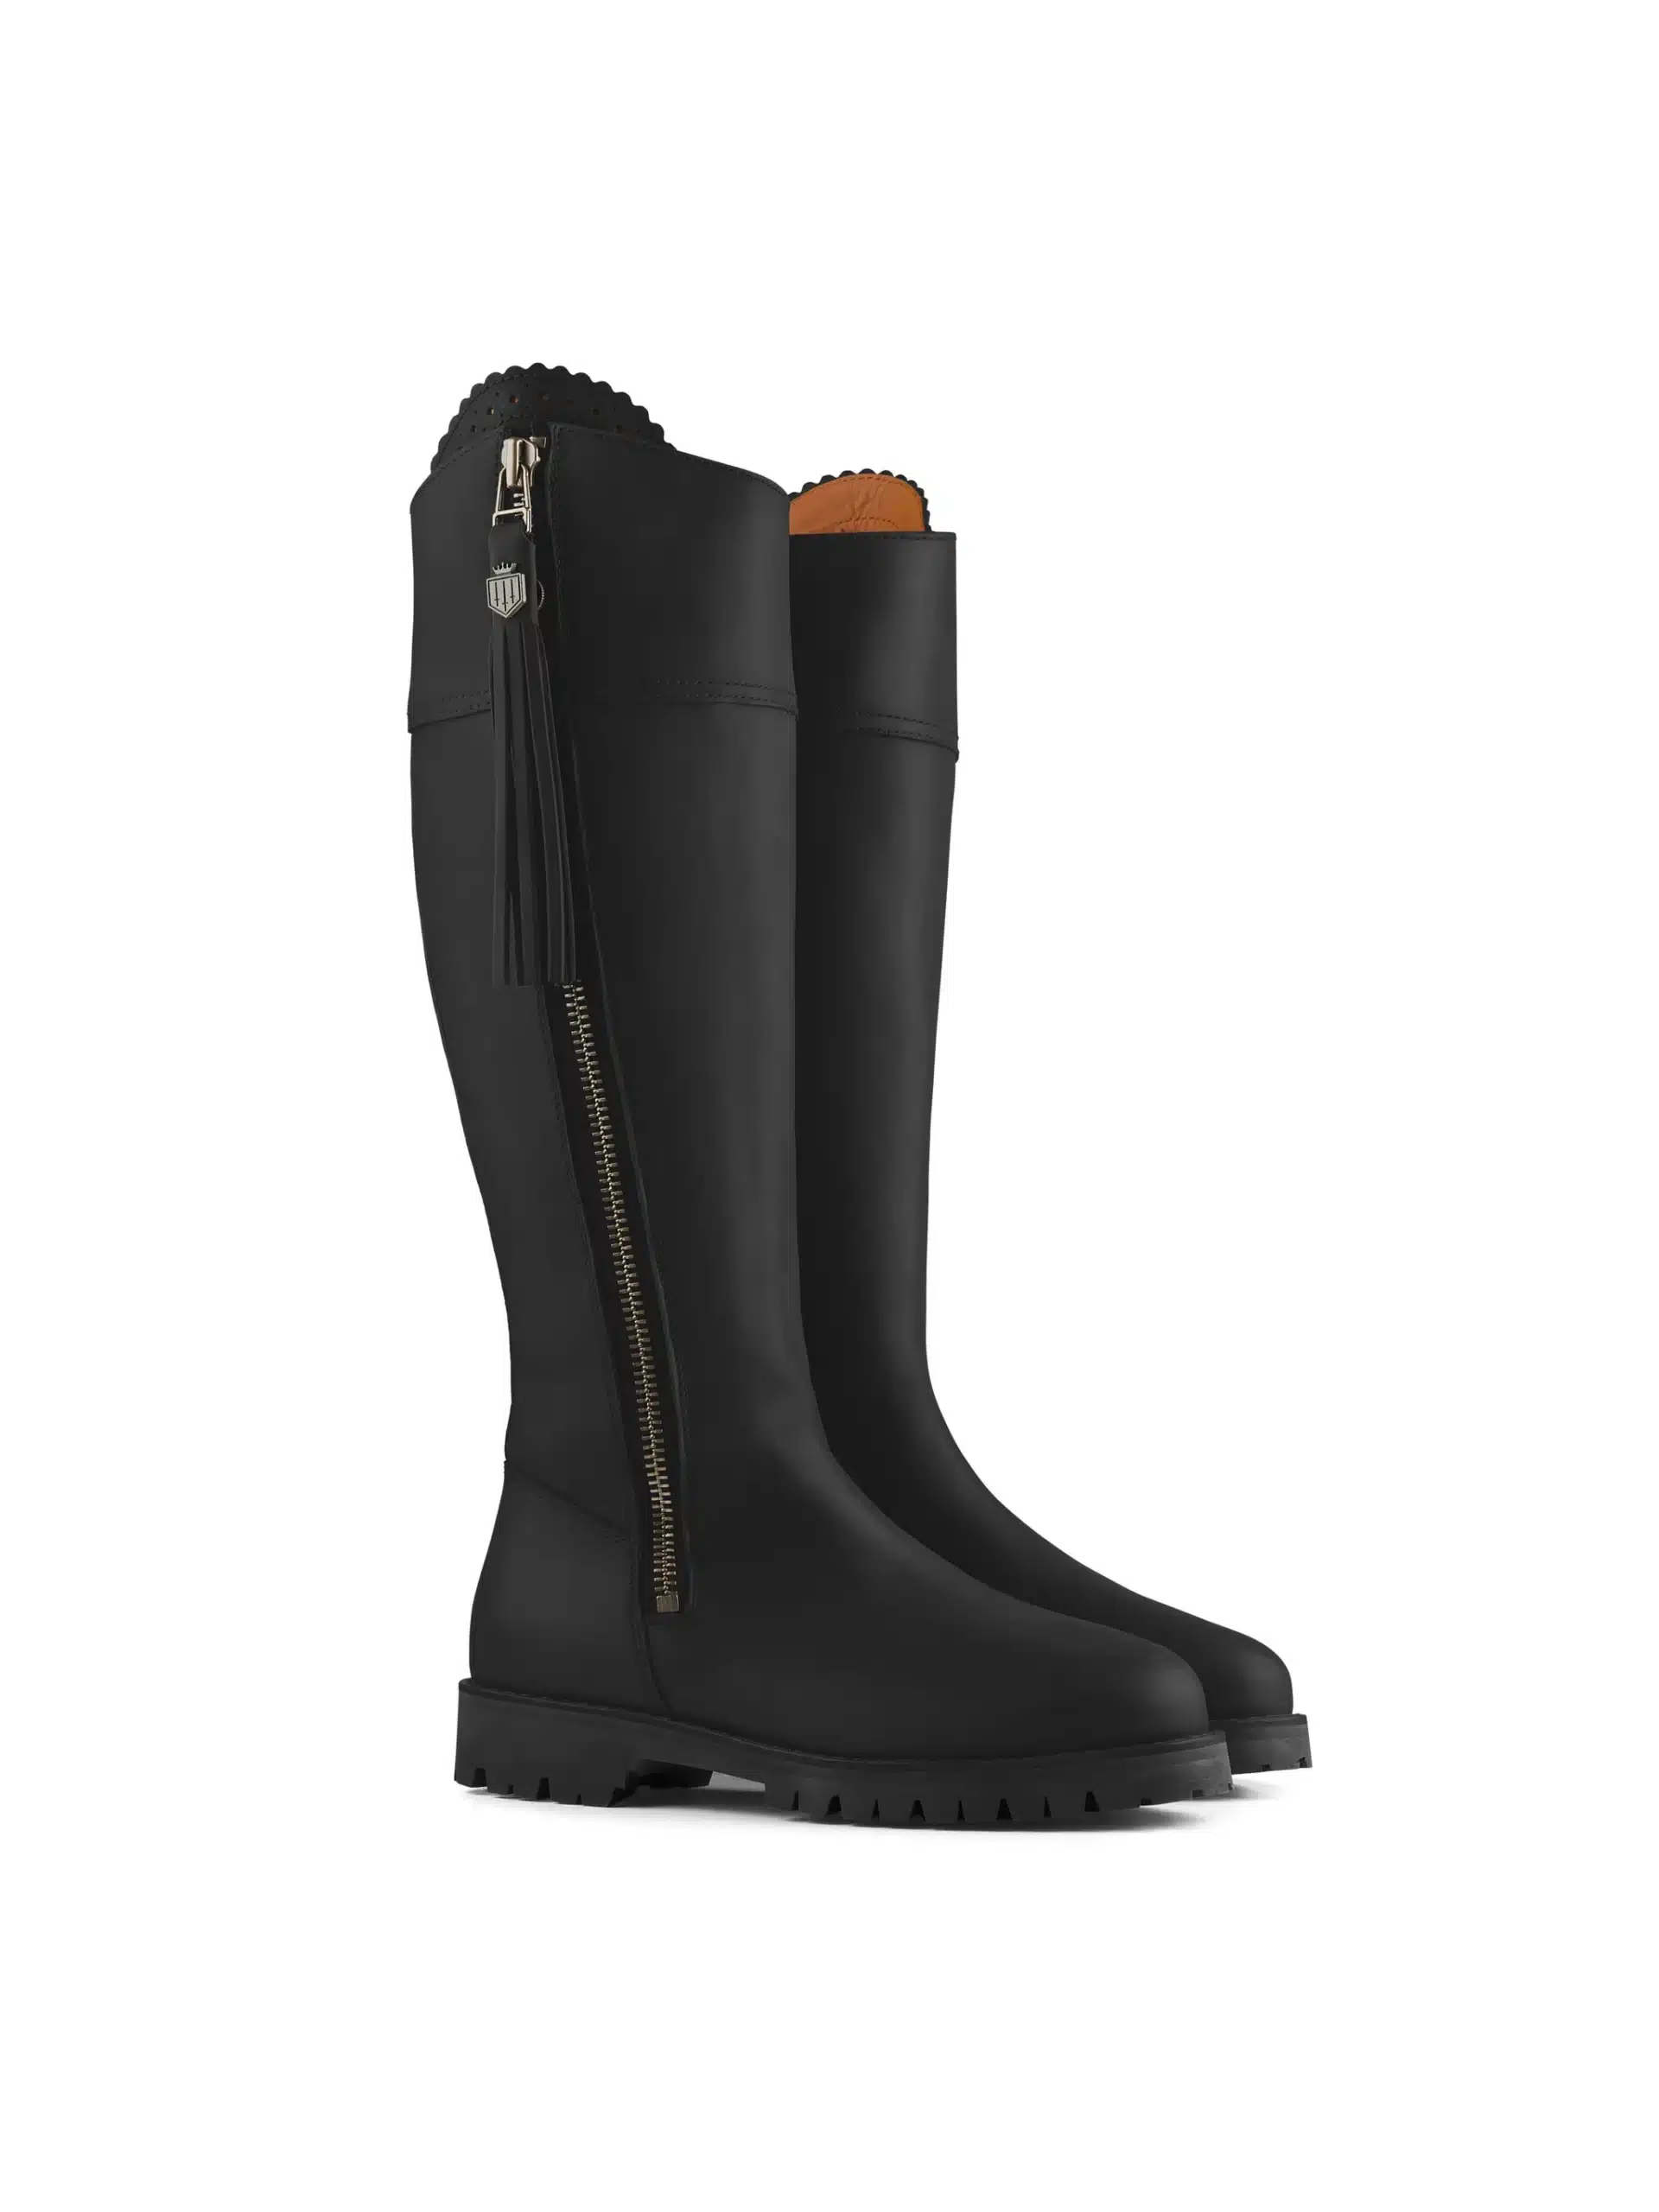 The Explorer Women’s Waterproof Boot – Black Leather, Regular Calf